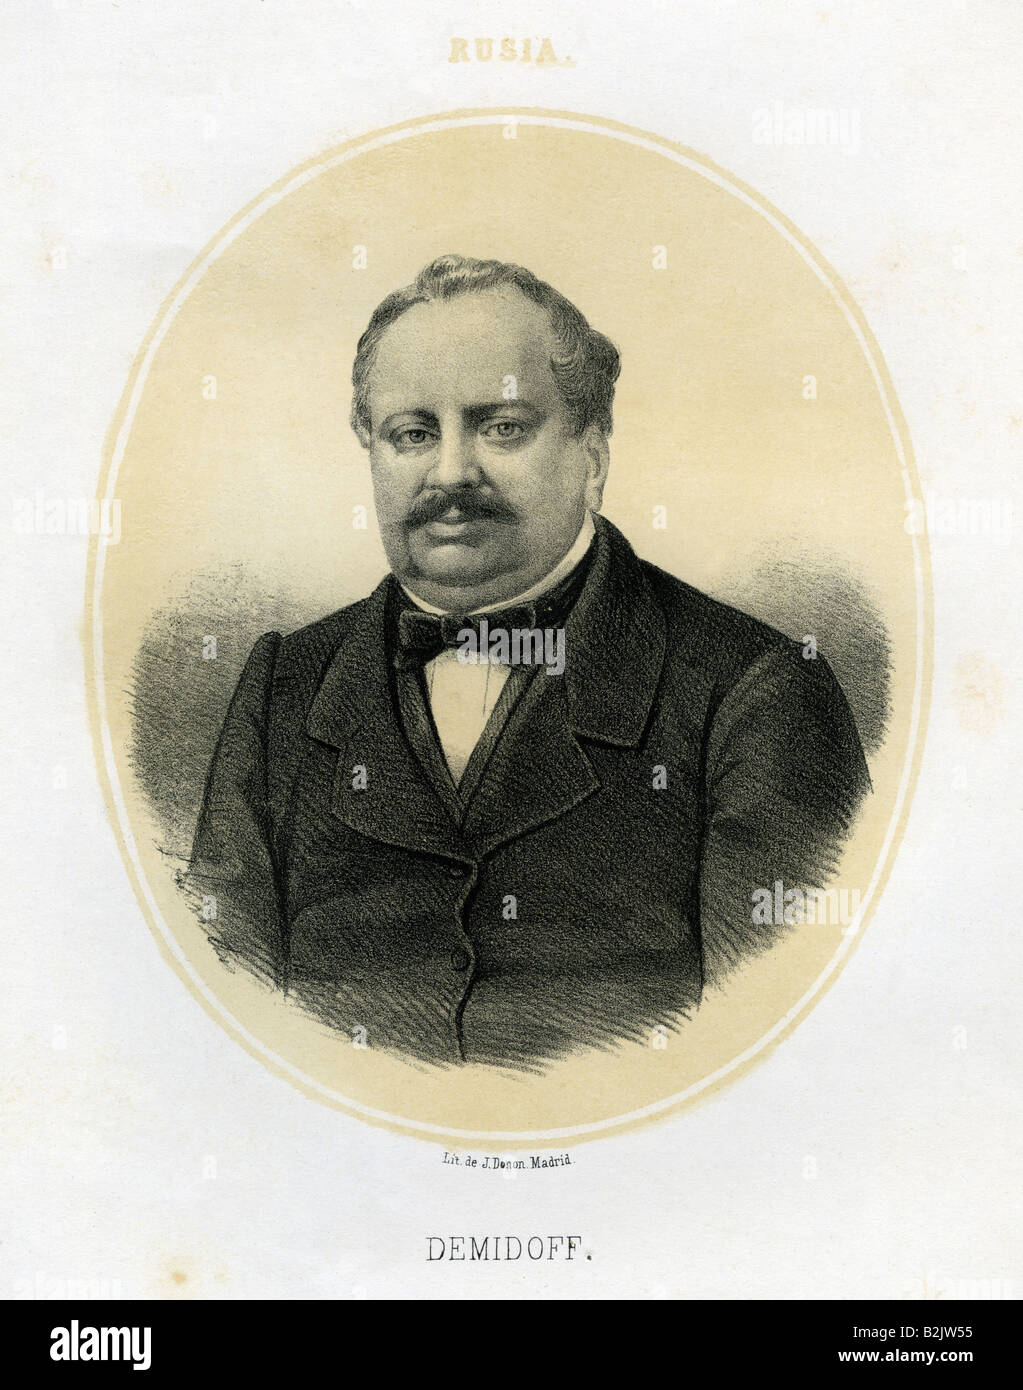 Demidoff, Anatole, 5.4.1813 - 29.4.1870, Russian industrialist, portrait, lithograph, by J. Donon, Madrid, Spain, 19th century, Stock Photo